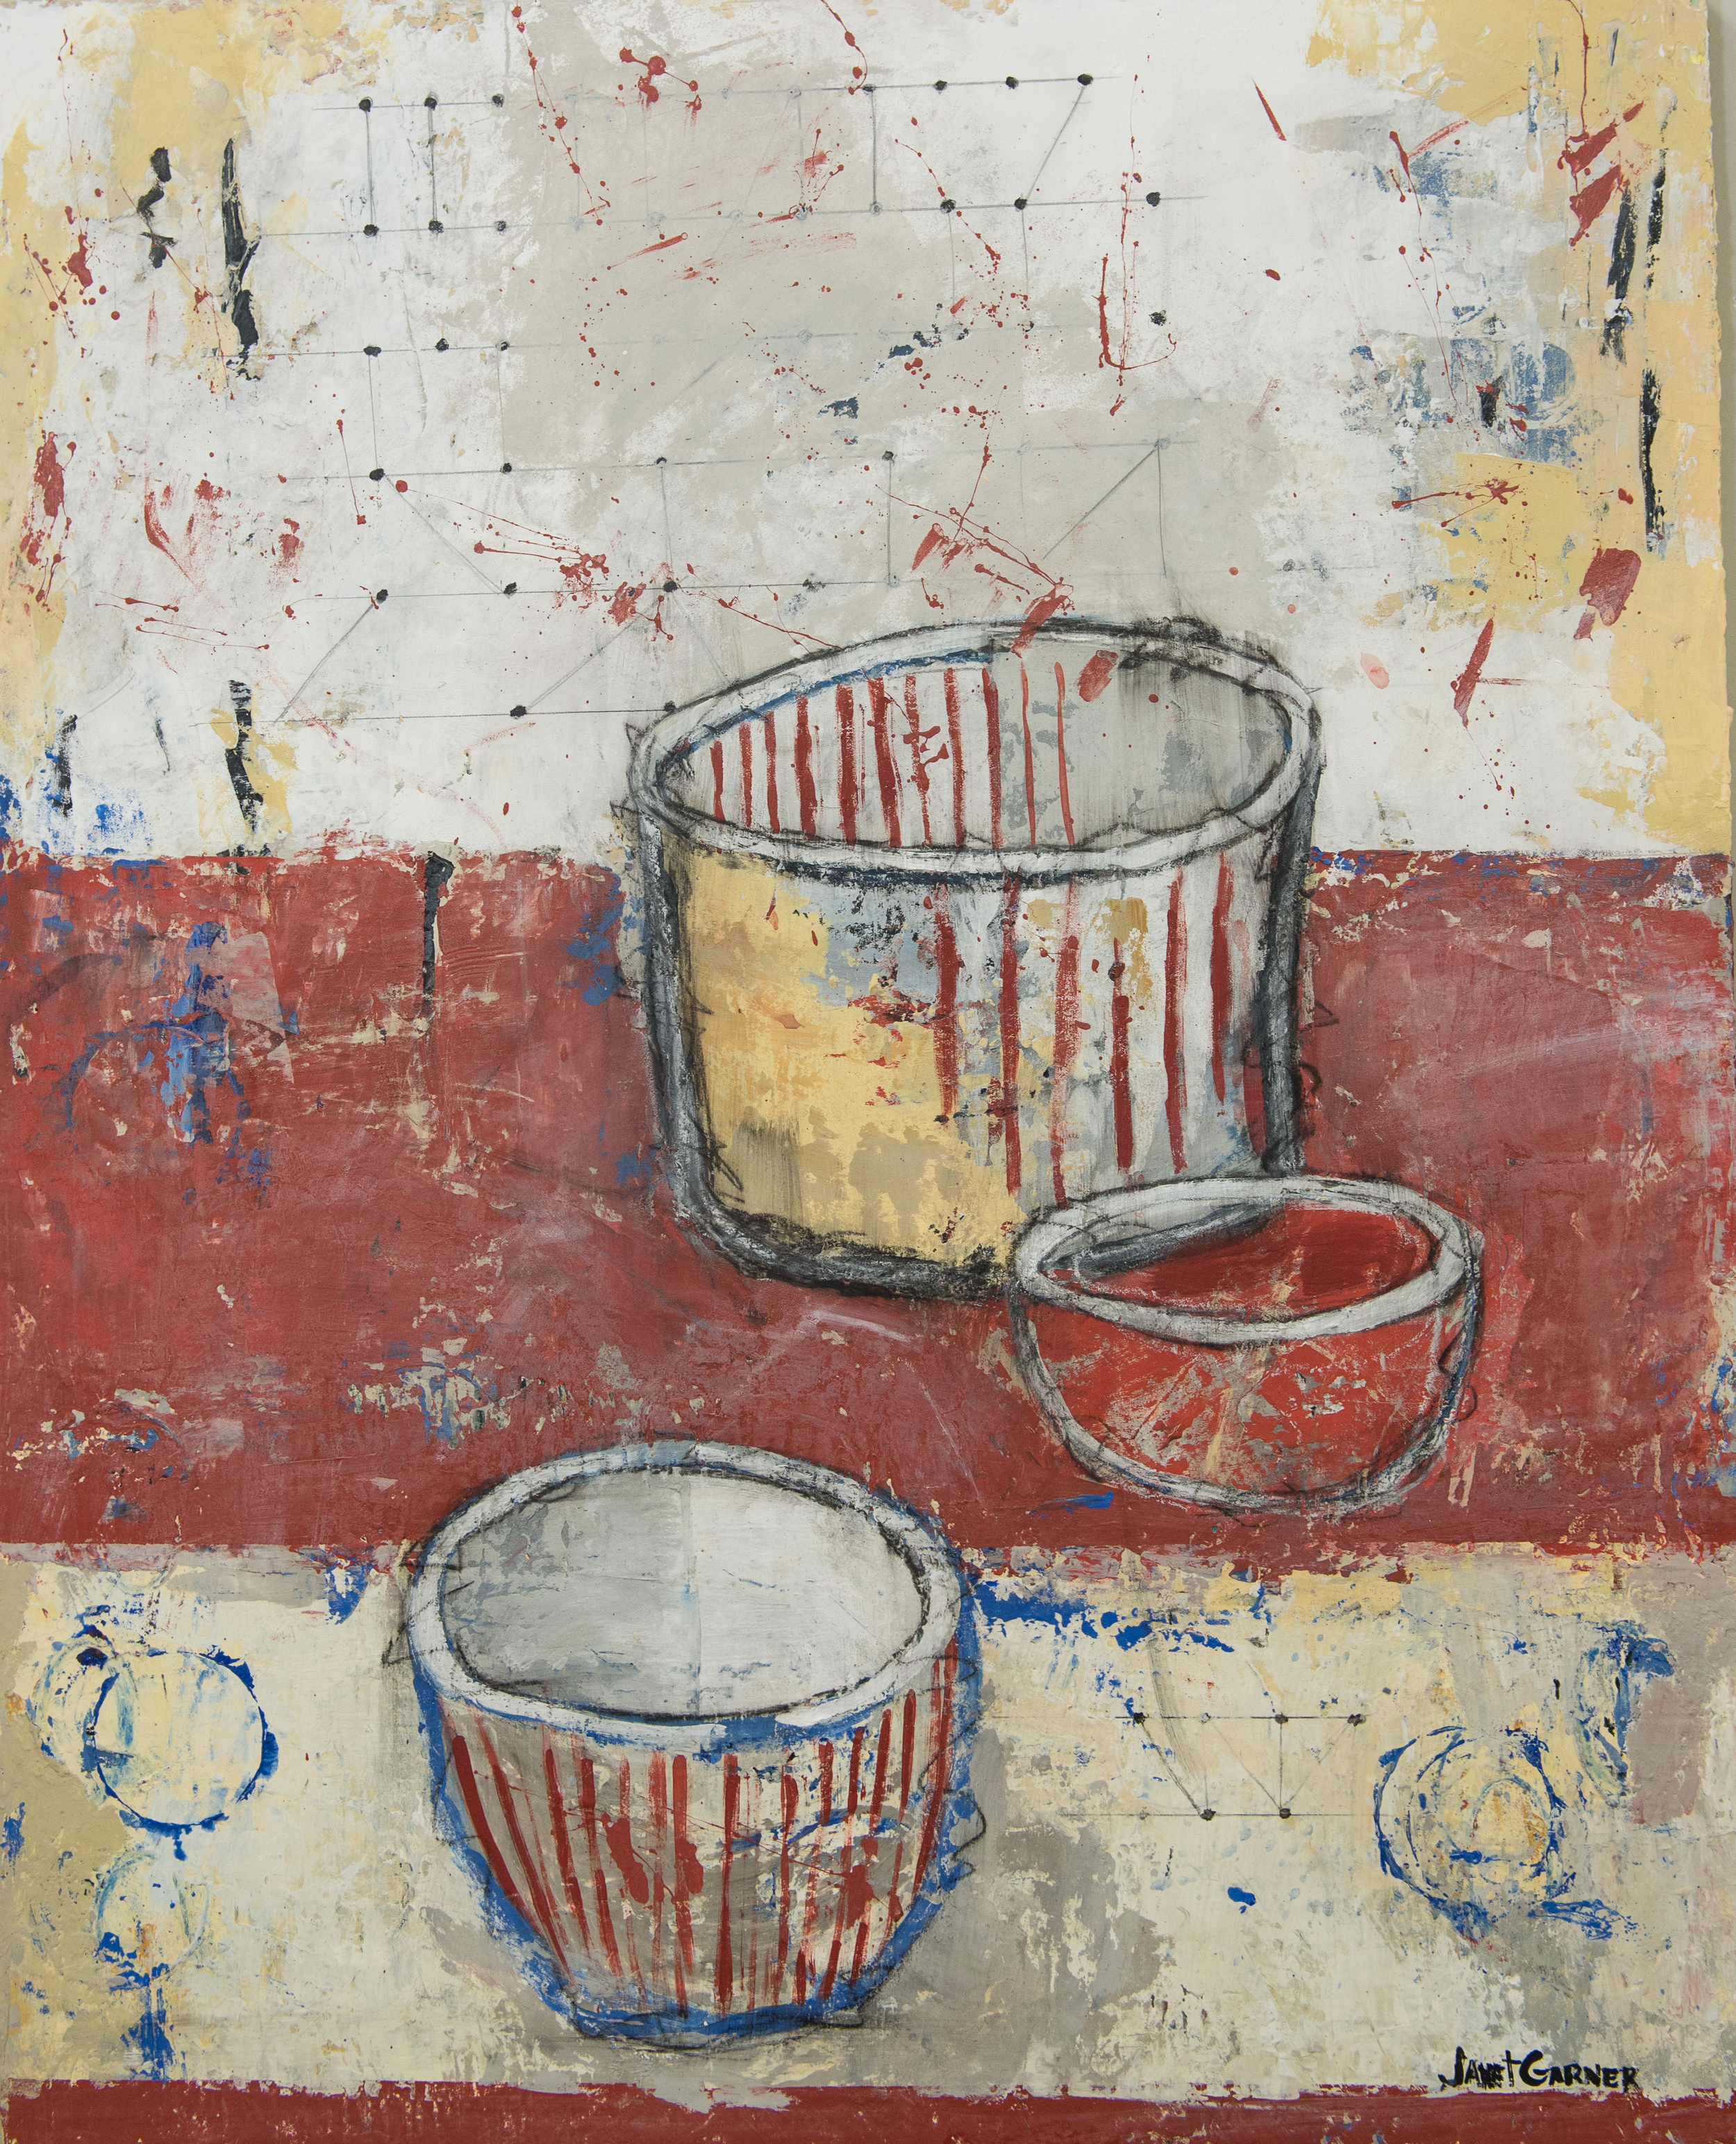  Is It a Popcorn Bowl?, 2015 Acrylic on canvas 24" x 30" 